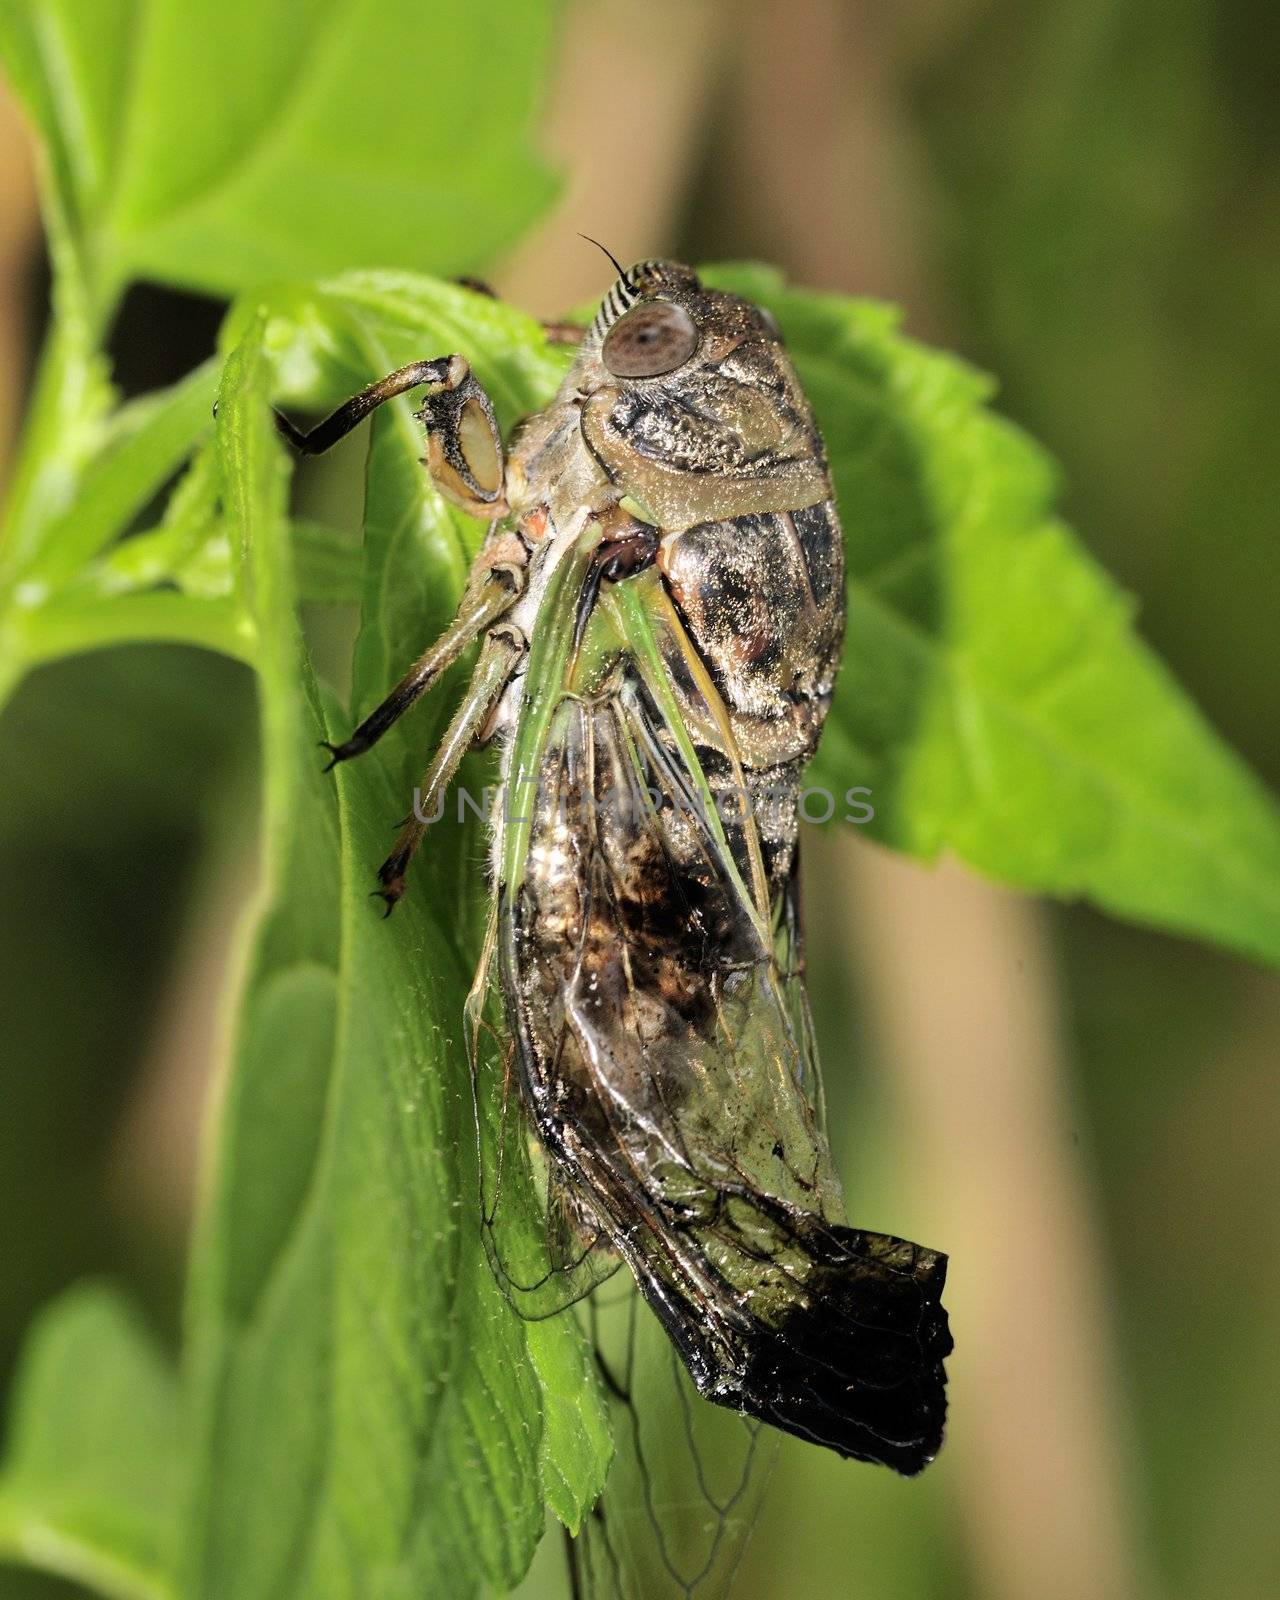 A cicada perched on a plant leaf molting.